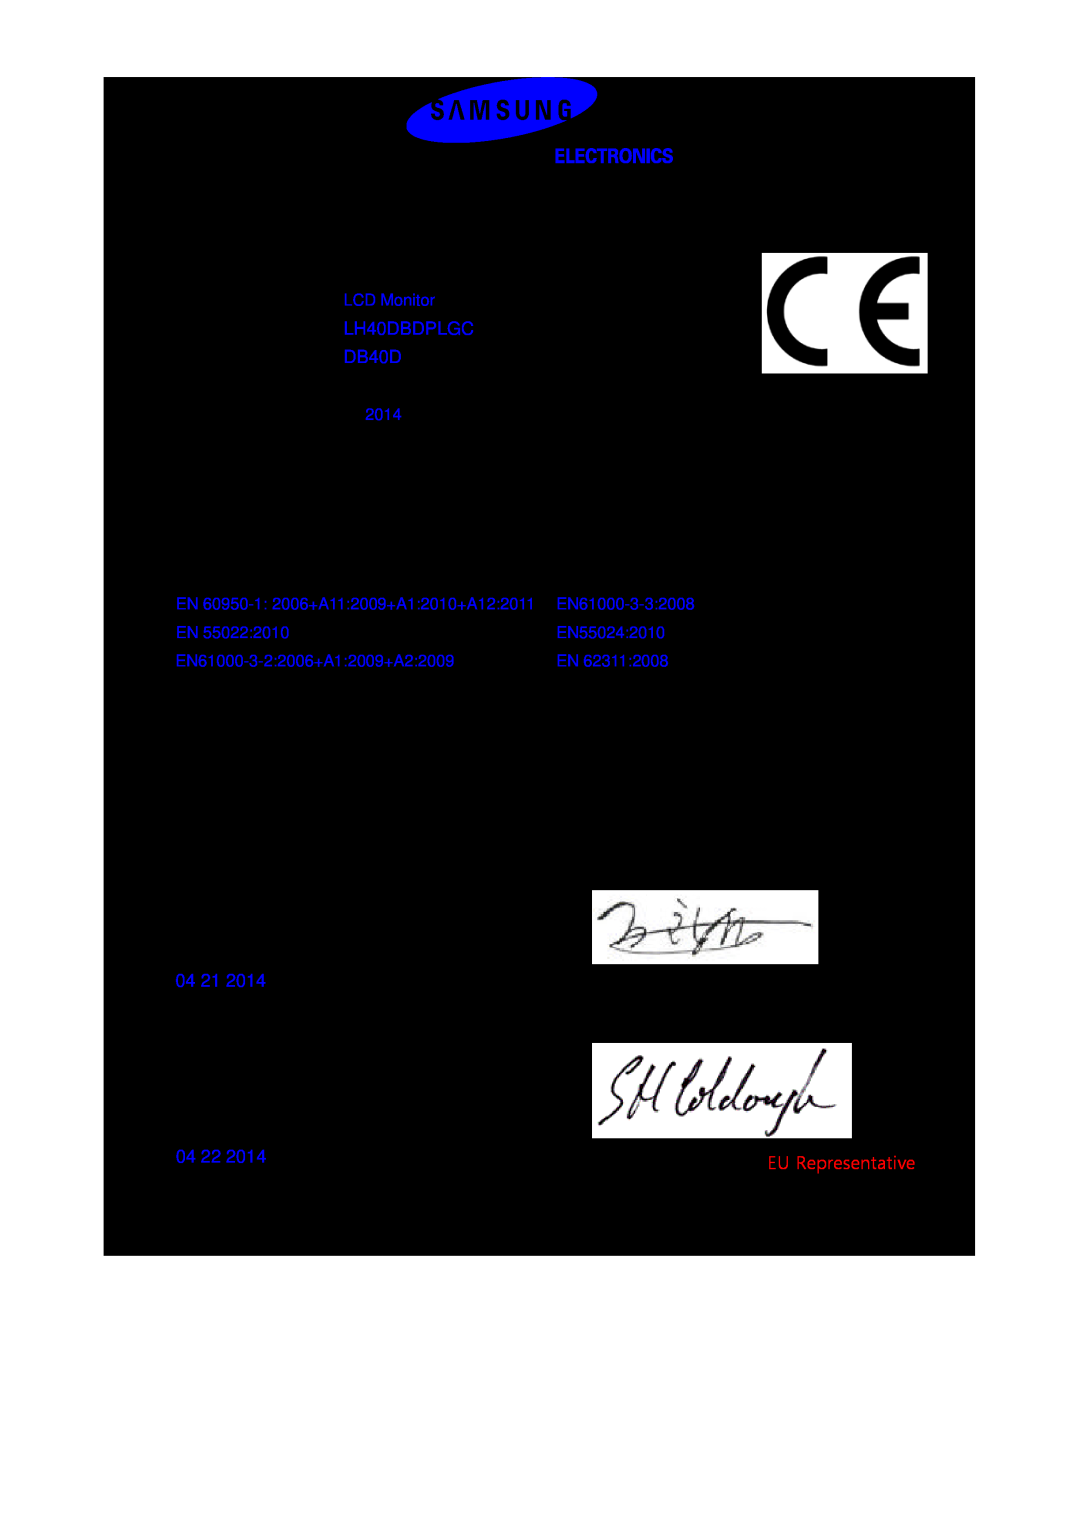 Samsung LH48DBDPLGC/EN, LH32DBDPLGC/EN, LH40DBDPLGC/EN, LH55DBDPLGC/EN manual Declaration of Conformity, DB48D, 04 21, 04 22 